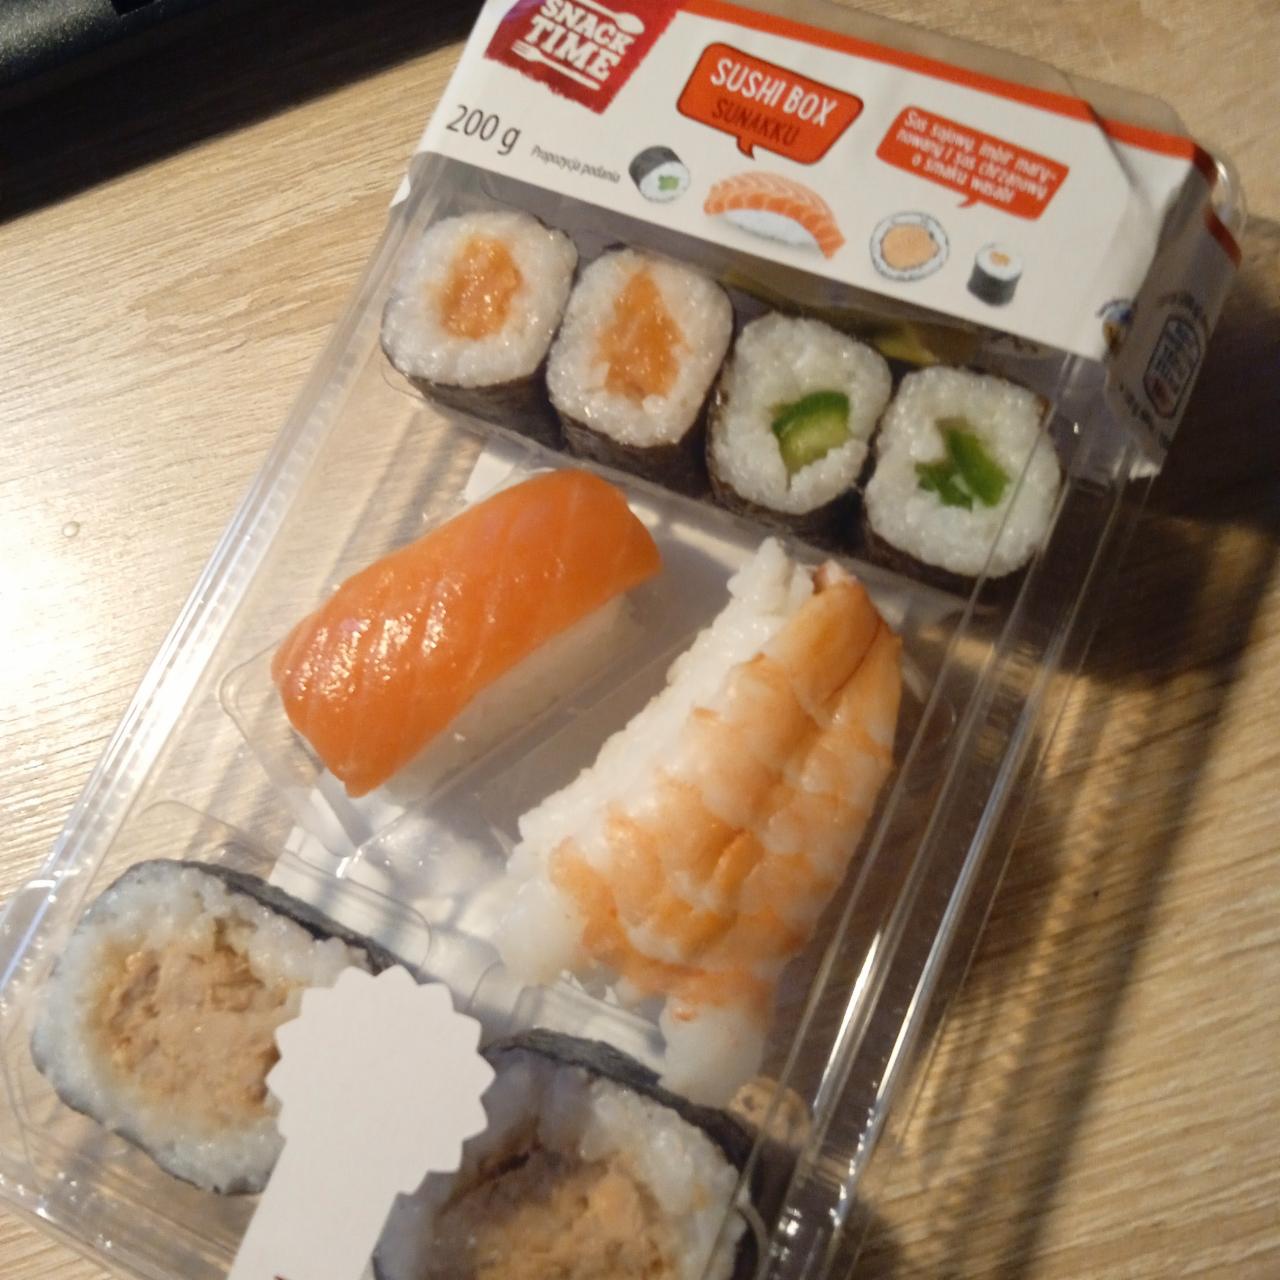 Zdjęcia - sushi box Snack time